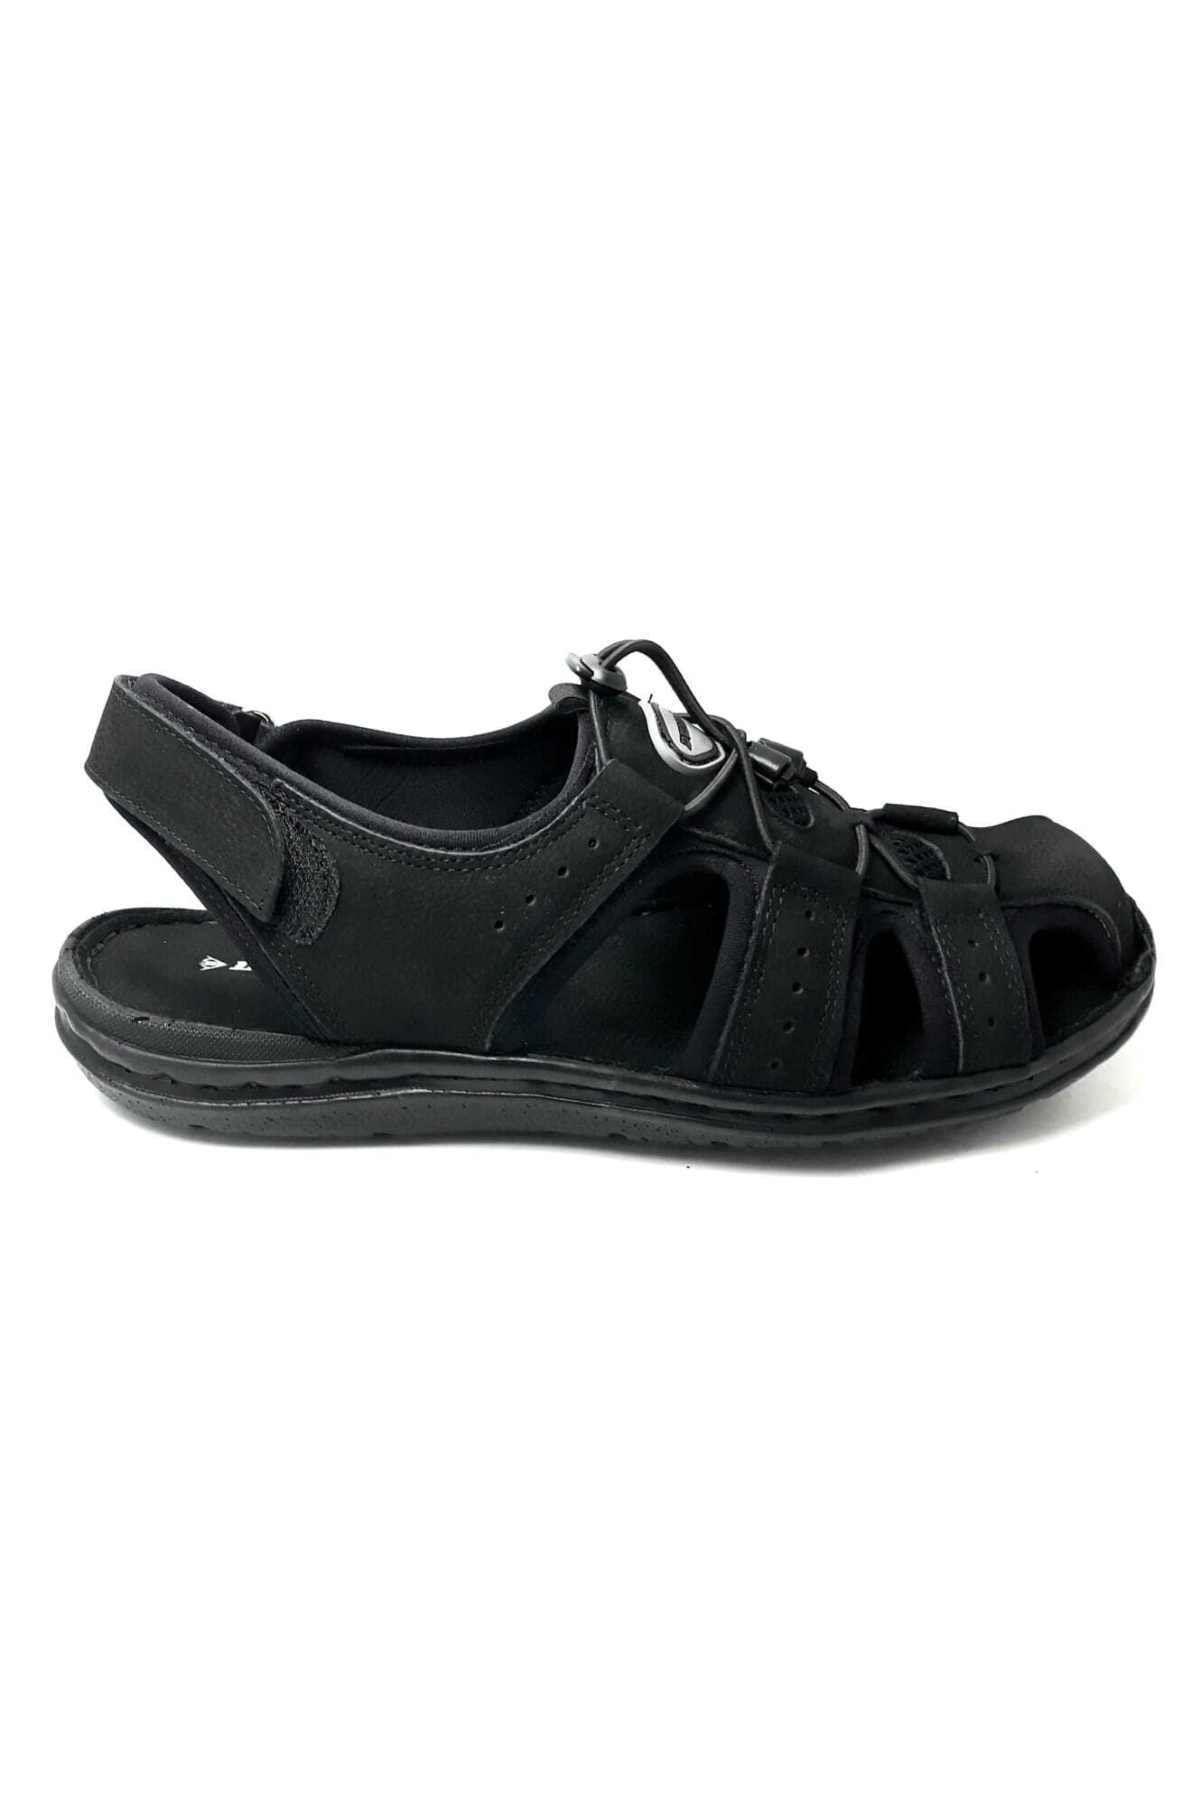 Dunlop Dnp-1702 Siyah Erkek Günlük Deri Sandalet